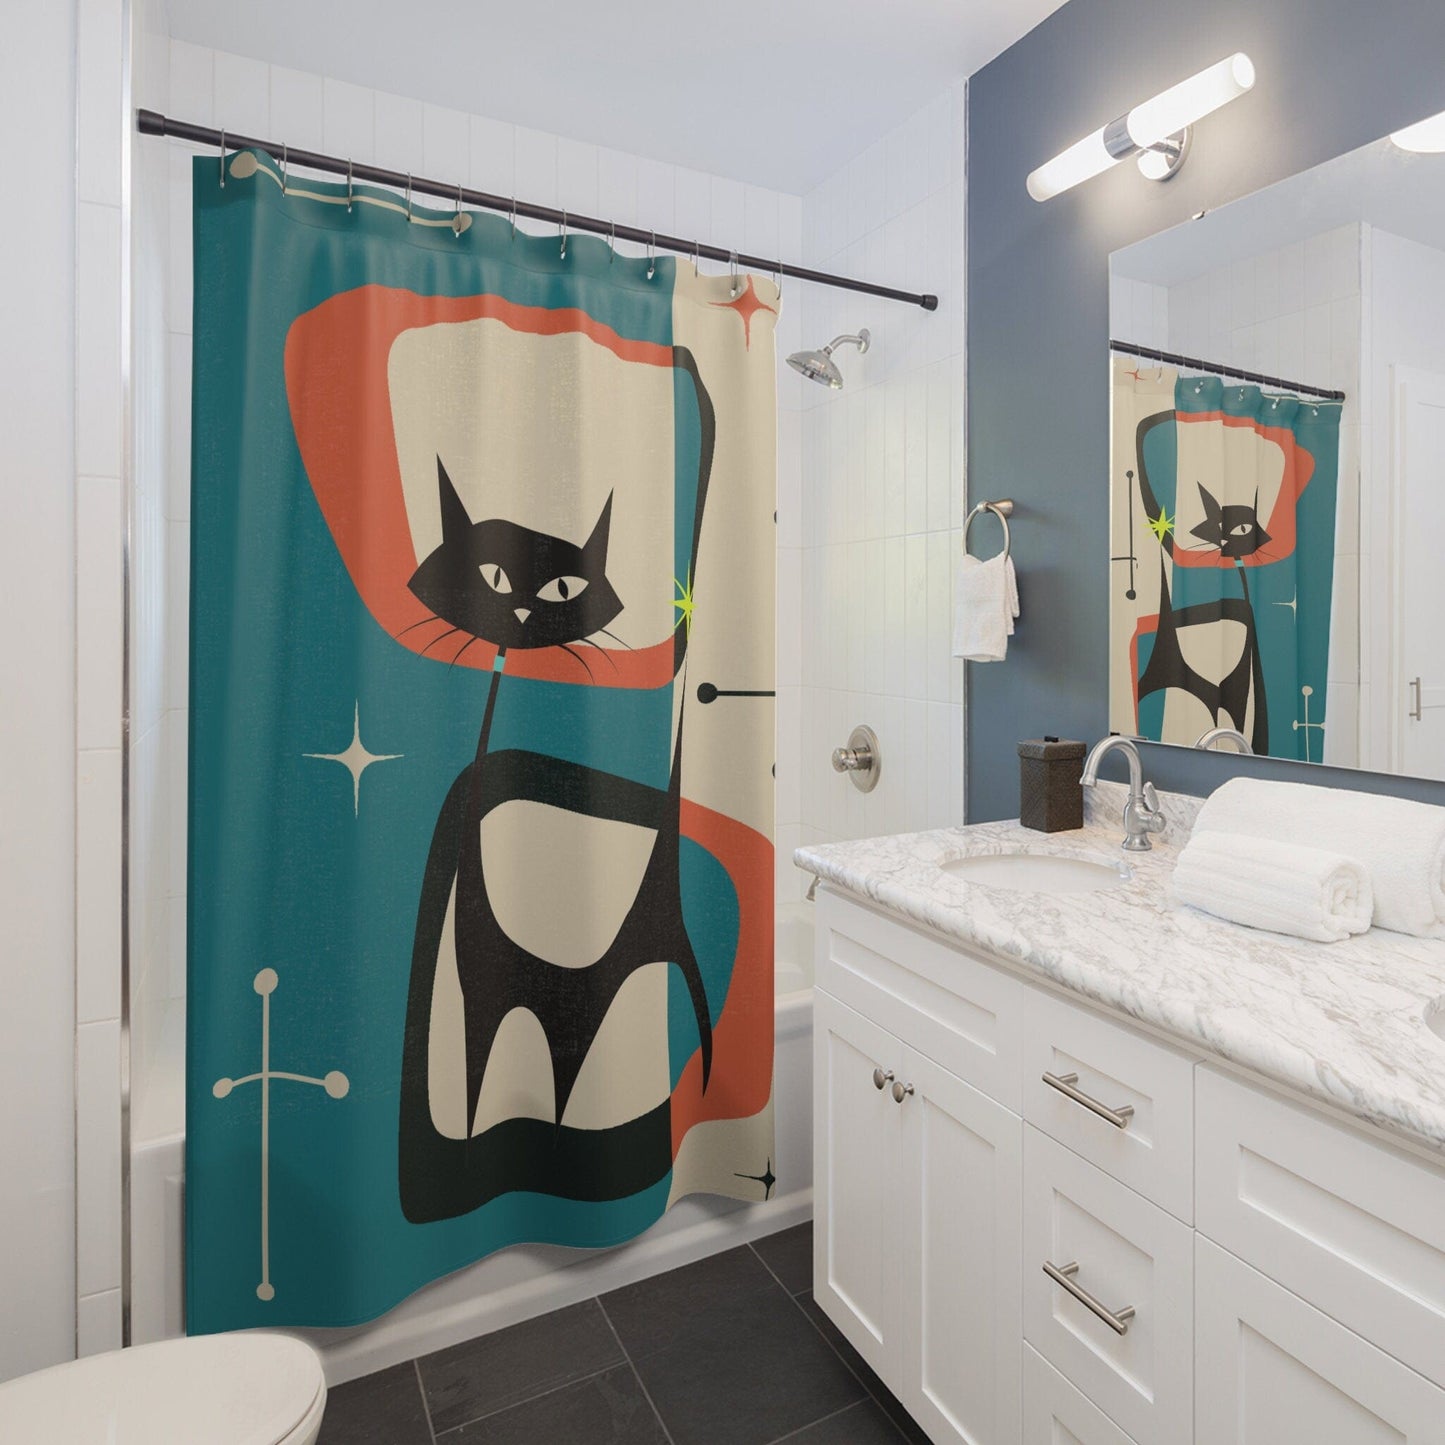 Kate McEnroe New York Atomic Cat Shower Curtains, Mid Century Modern Geometric Teal Blue, Burnt Orange, Cream MCM Starburst Bath Curtains, Retro Bathroom Decor Shower Curtains